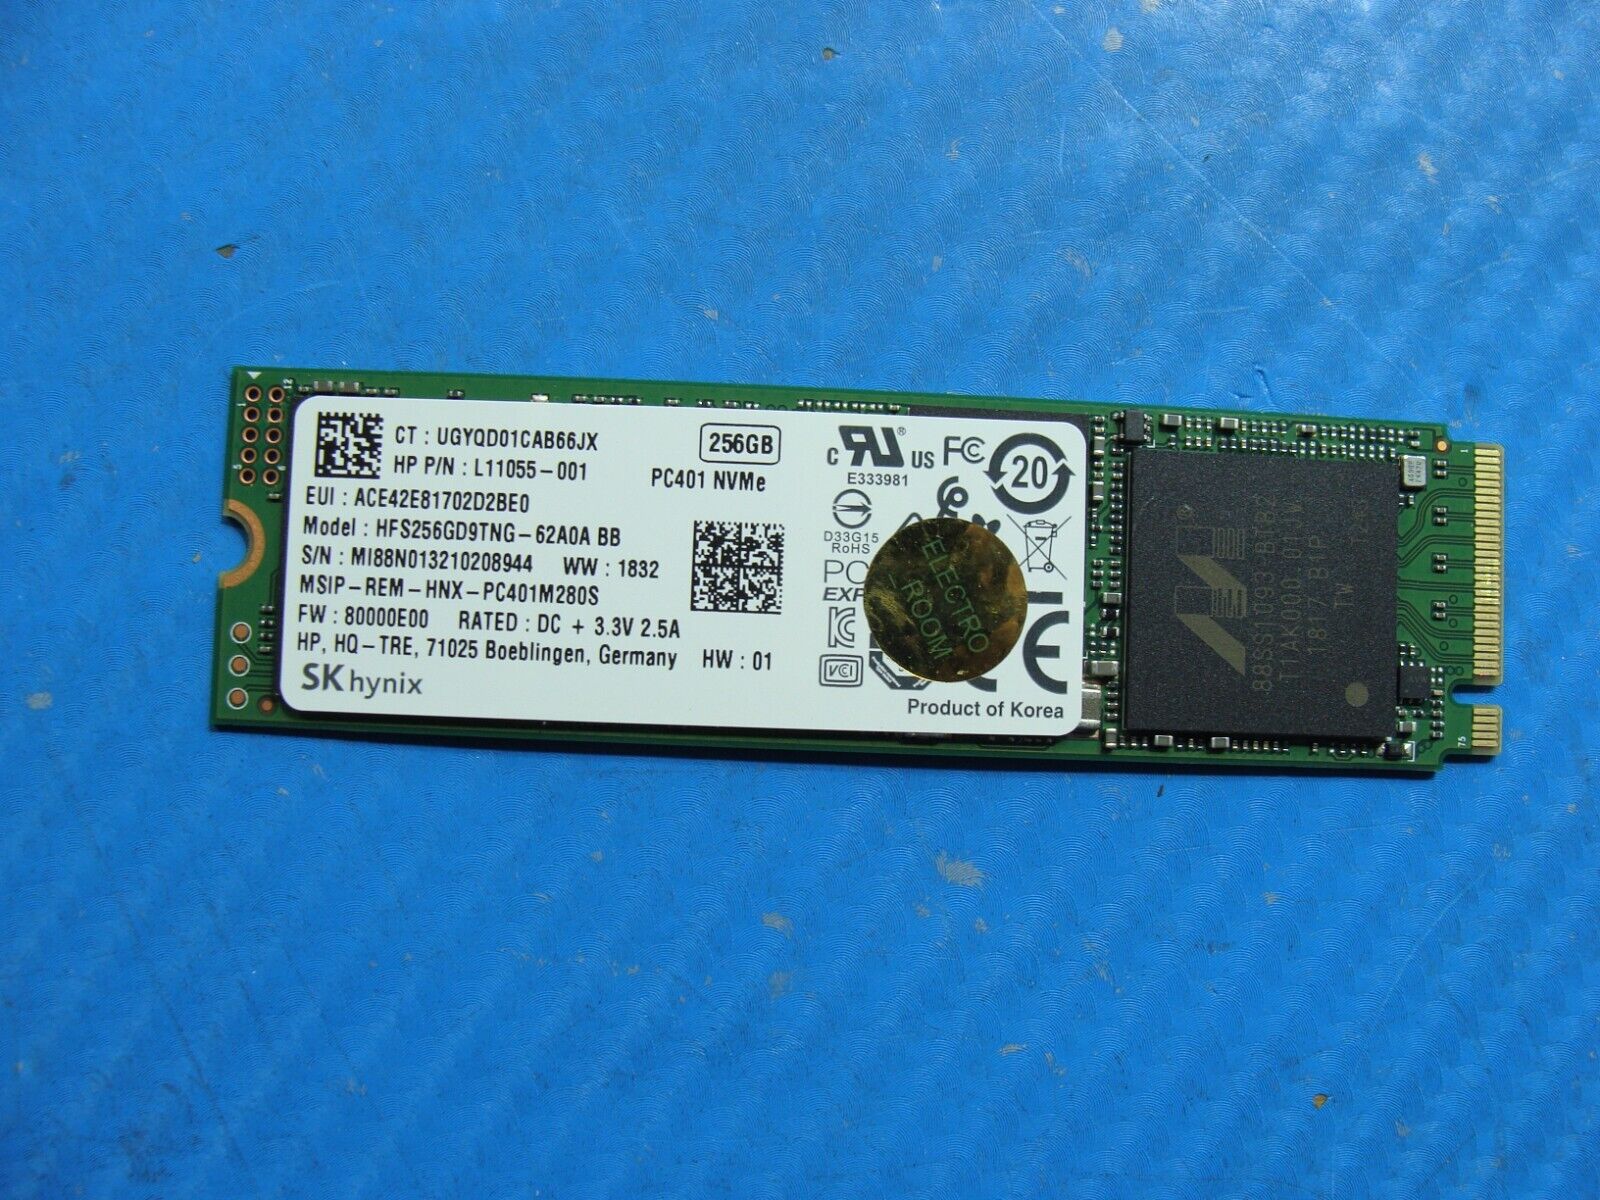 HP 450 G5 SKhynix NVMe M.2 256GB SSD Solid State Drive HFS256GD9TNG-62A0A